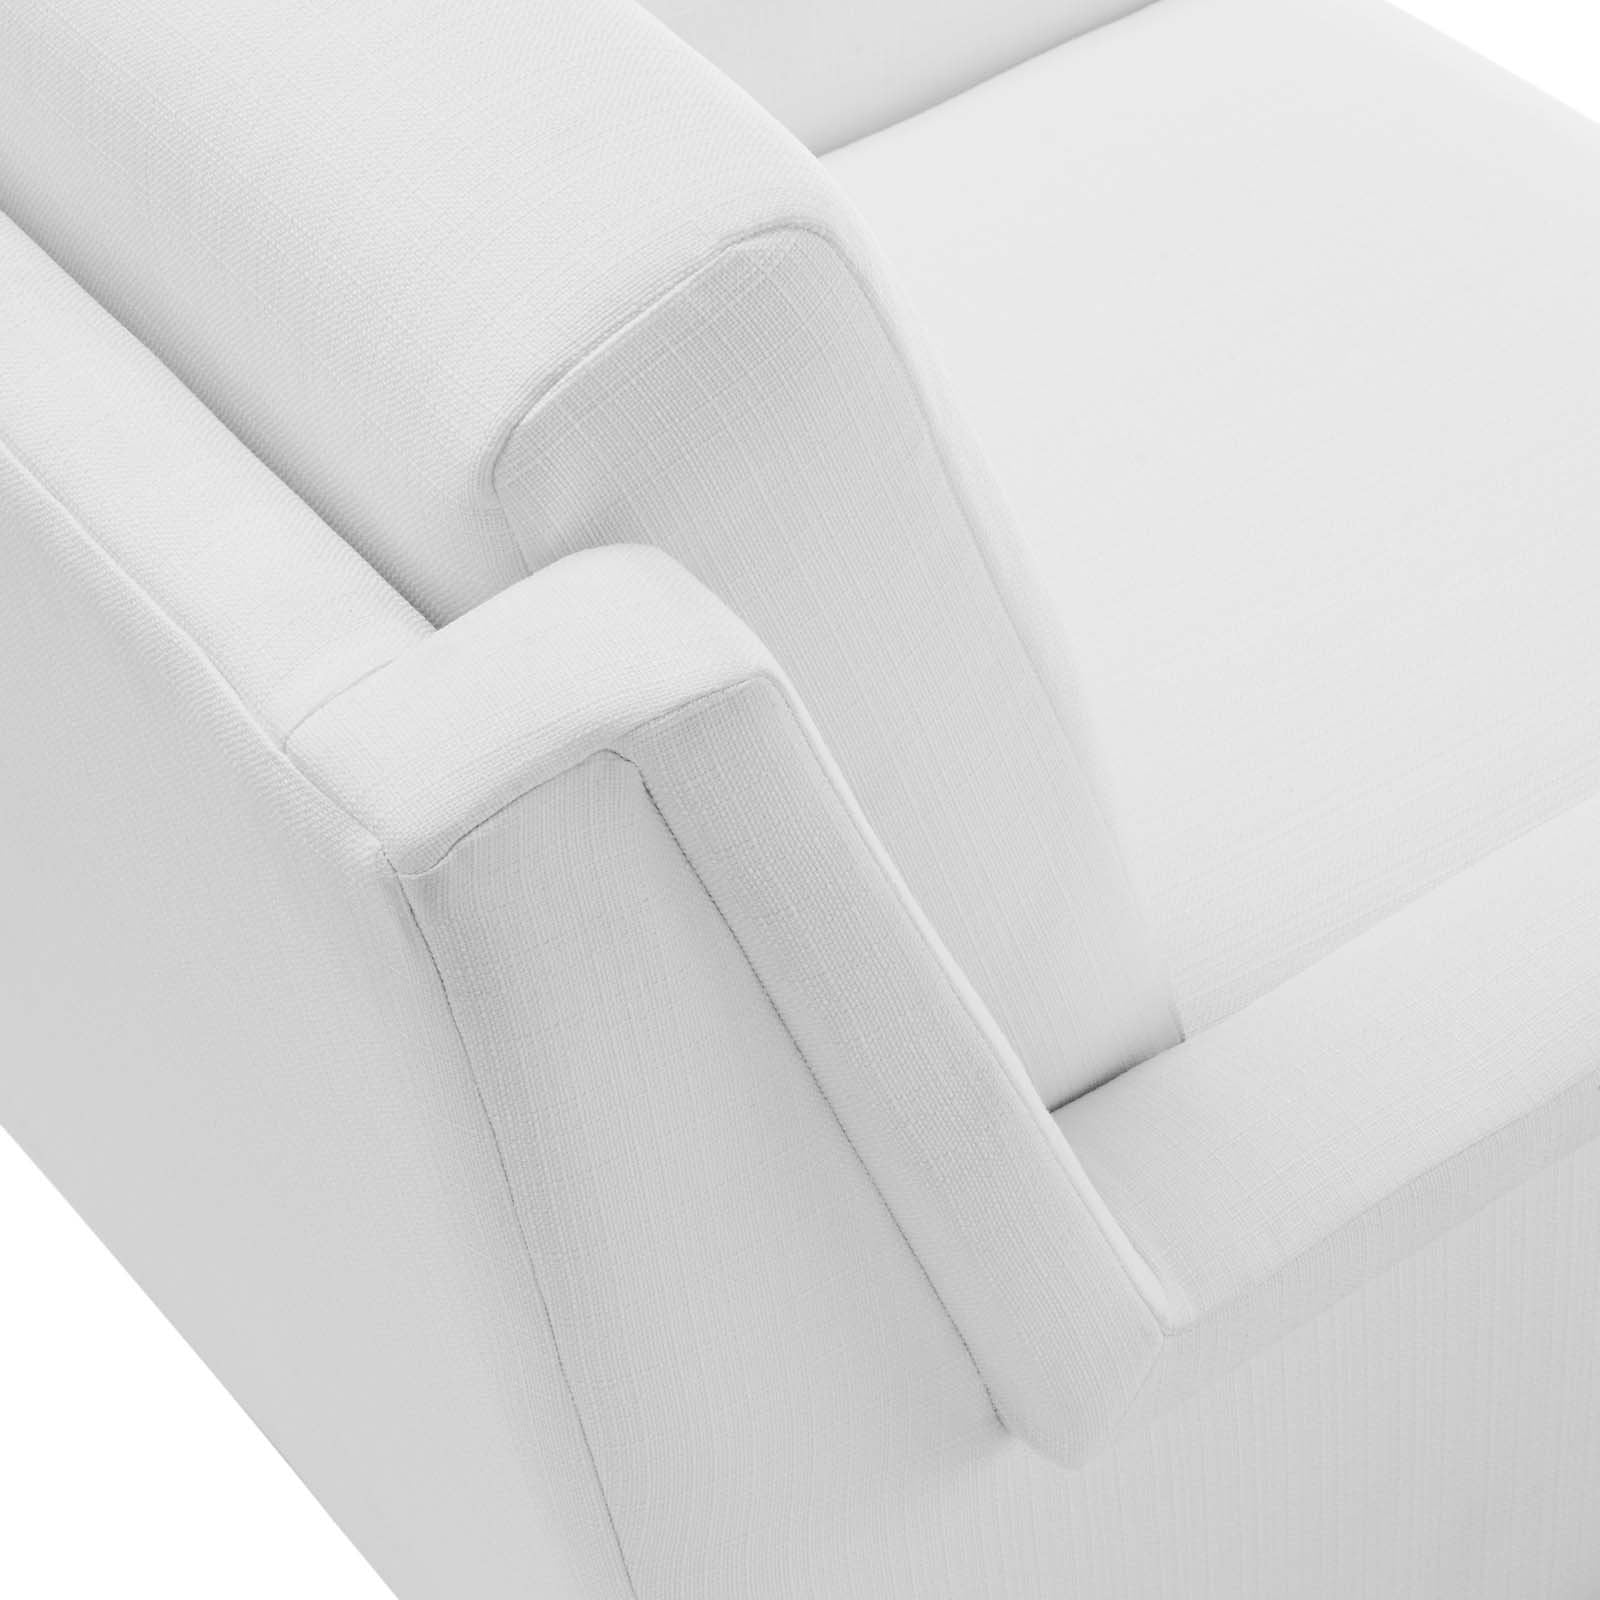 Chesapeake Fabric Armchair - East Shore Modern Home Furnishings